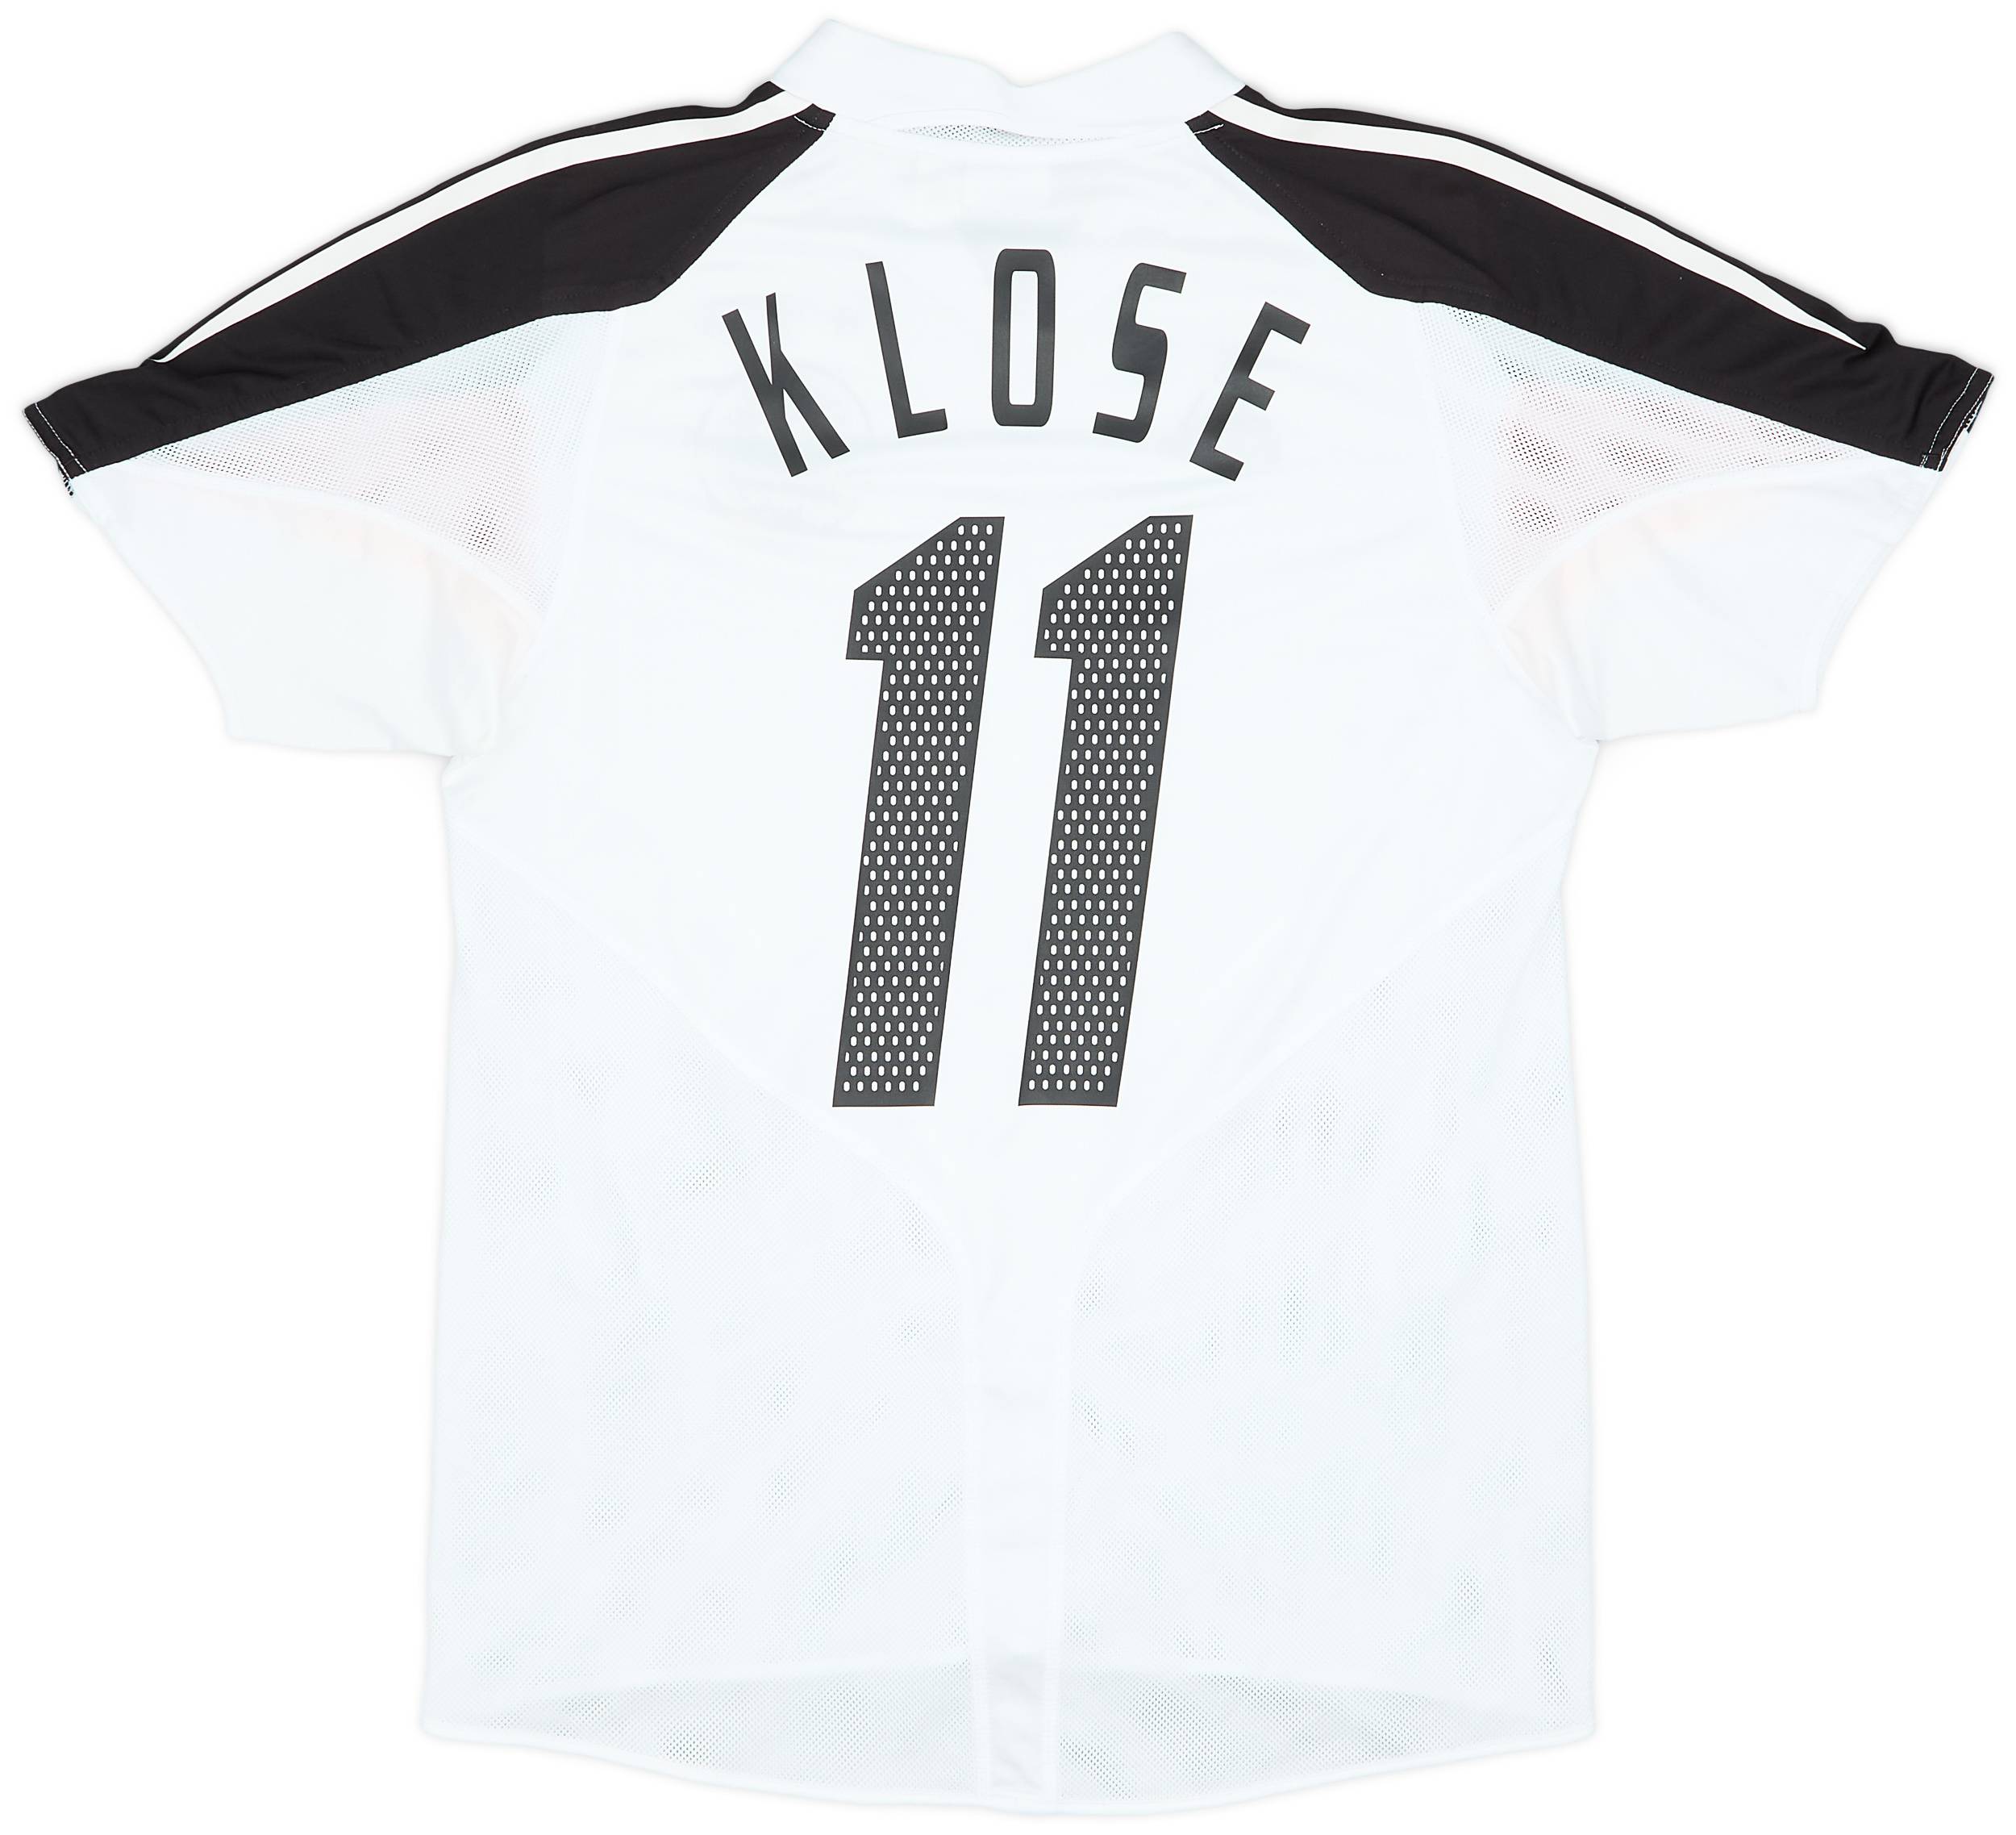 2004-05 Germany Home Shirt Klose #11 - 9/10 - (XL.Boys)